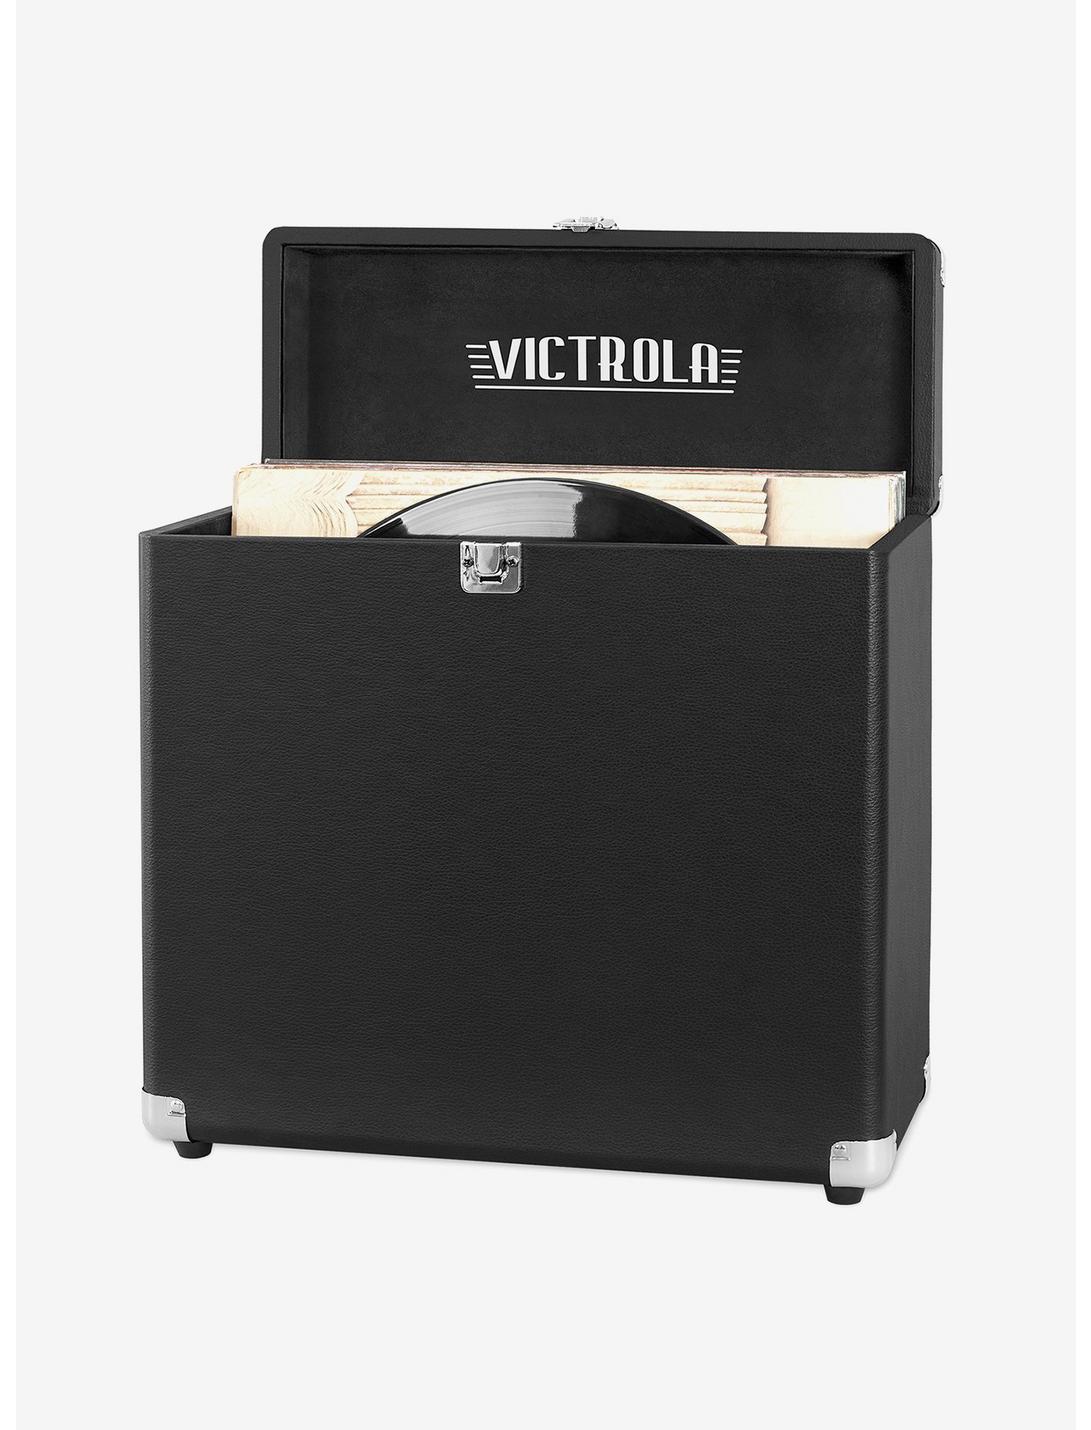 Victrola Storage Case For Vinyl Turntable Records - Black, , hi-res